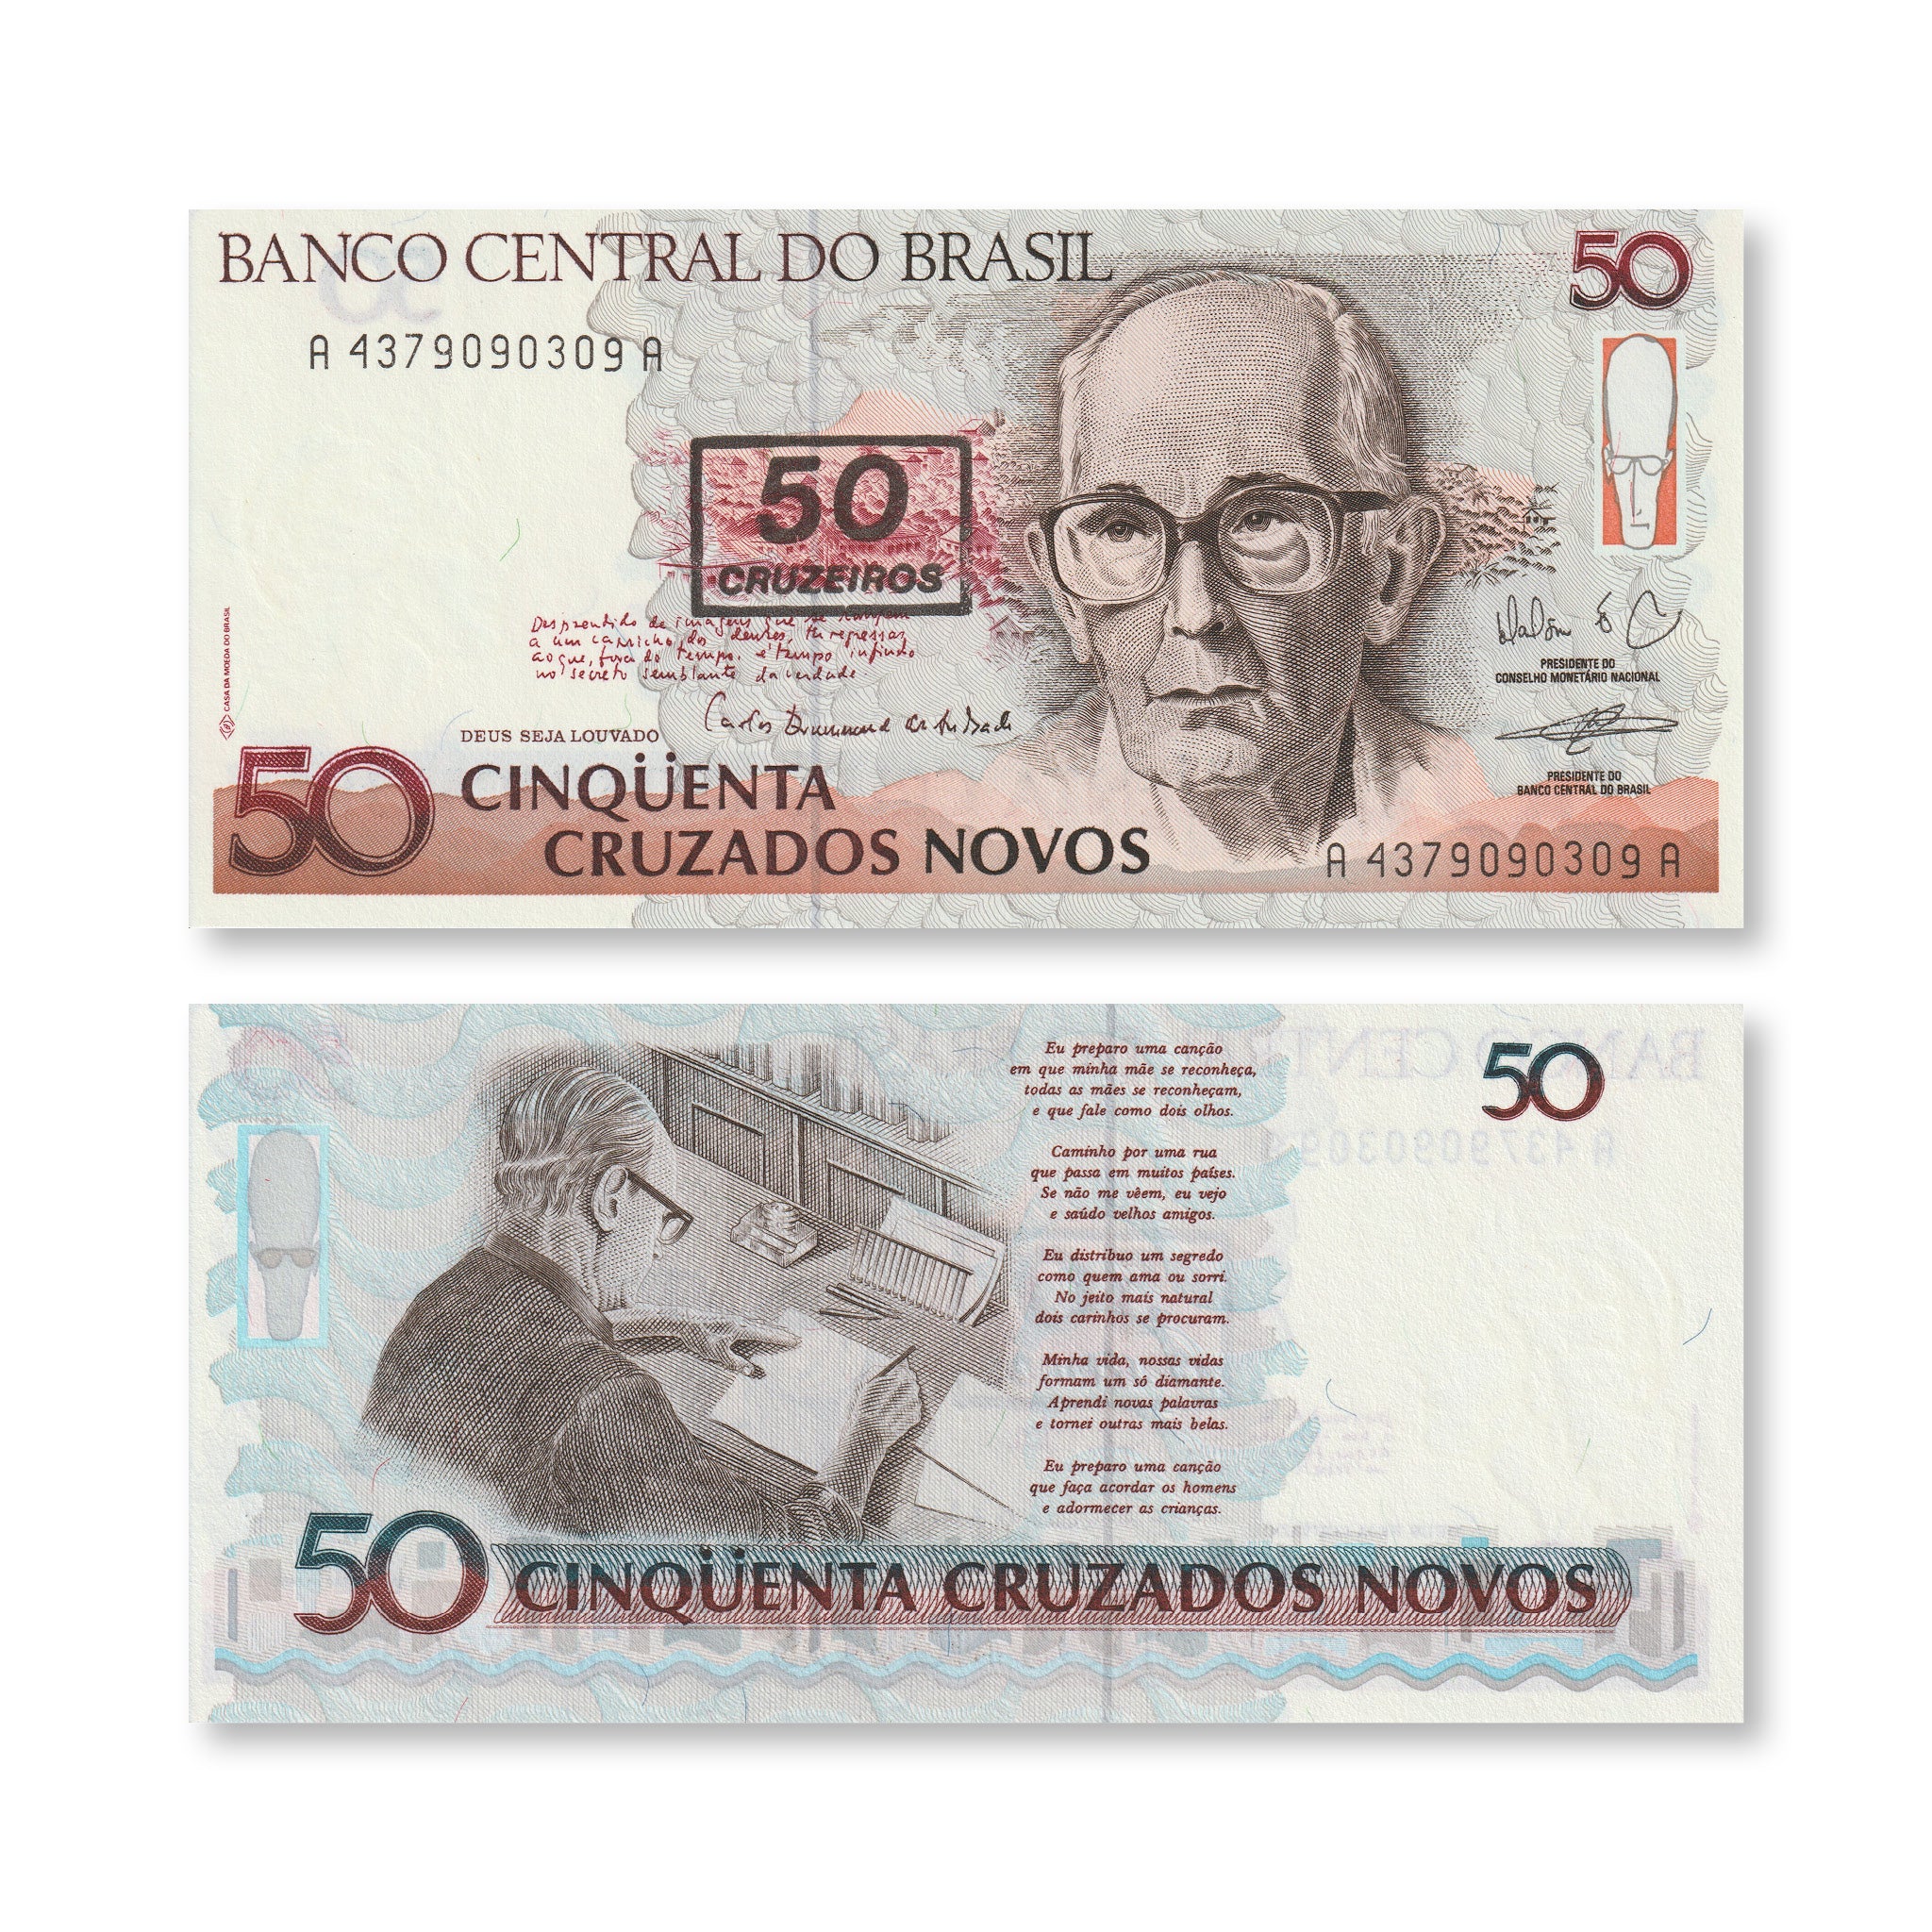 Brazil 50 Cruzeiros, 1990, B845a, P223, UNC - Robert's World Money - World Banknotes